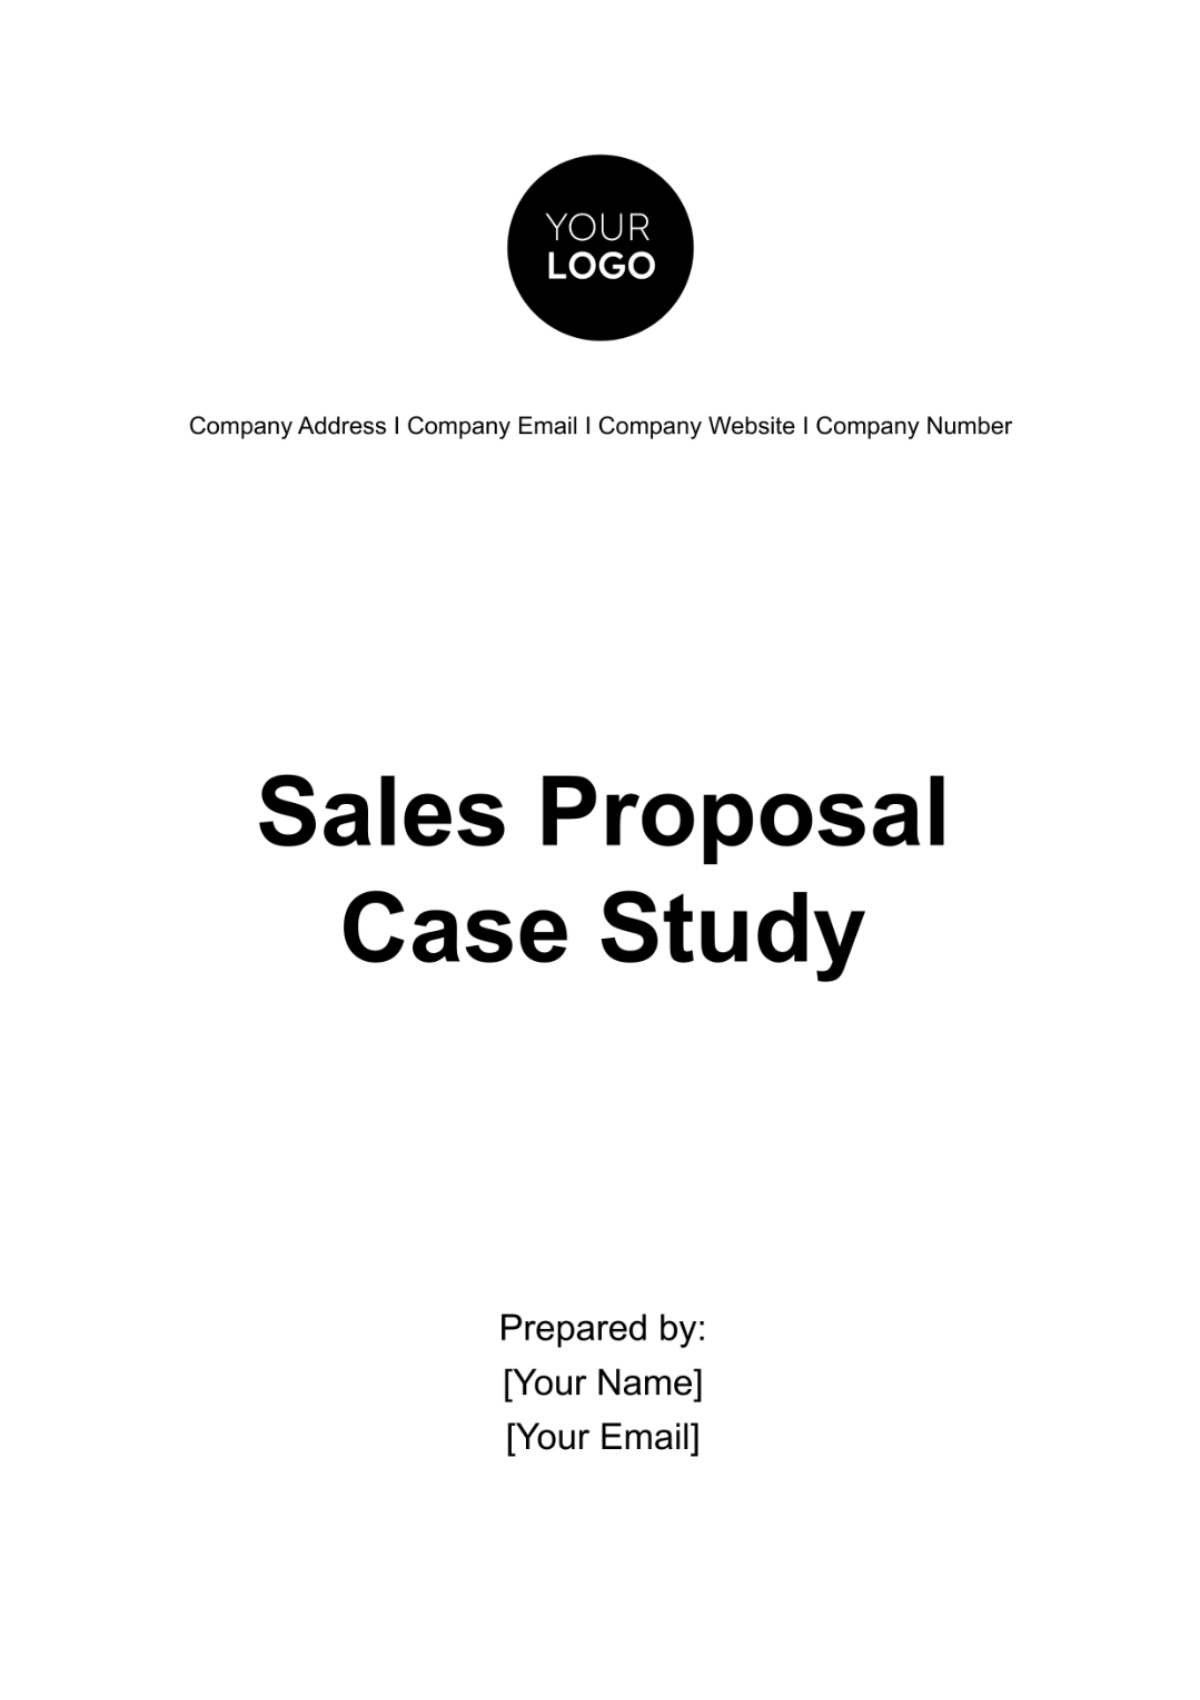 Sales Proposal Case Study Template